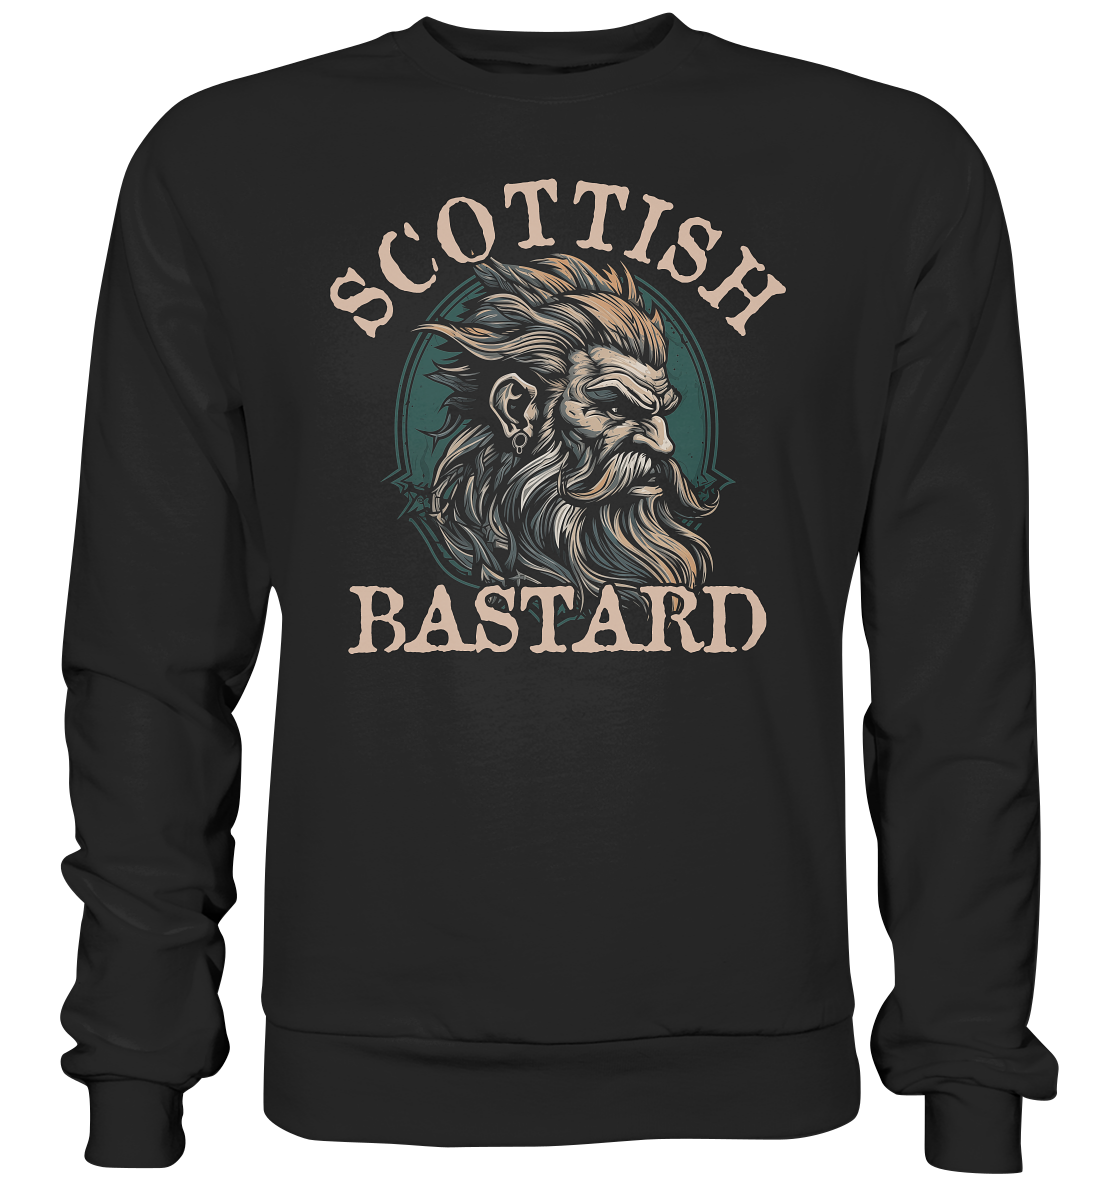 Scottish Bastard "Artwork I" - Premium Sweatshirt